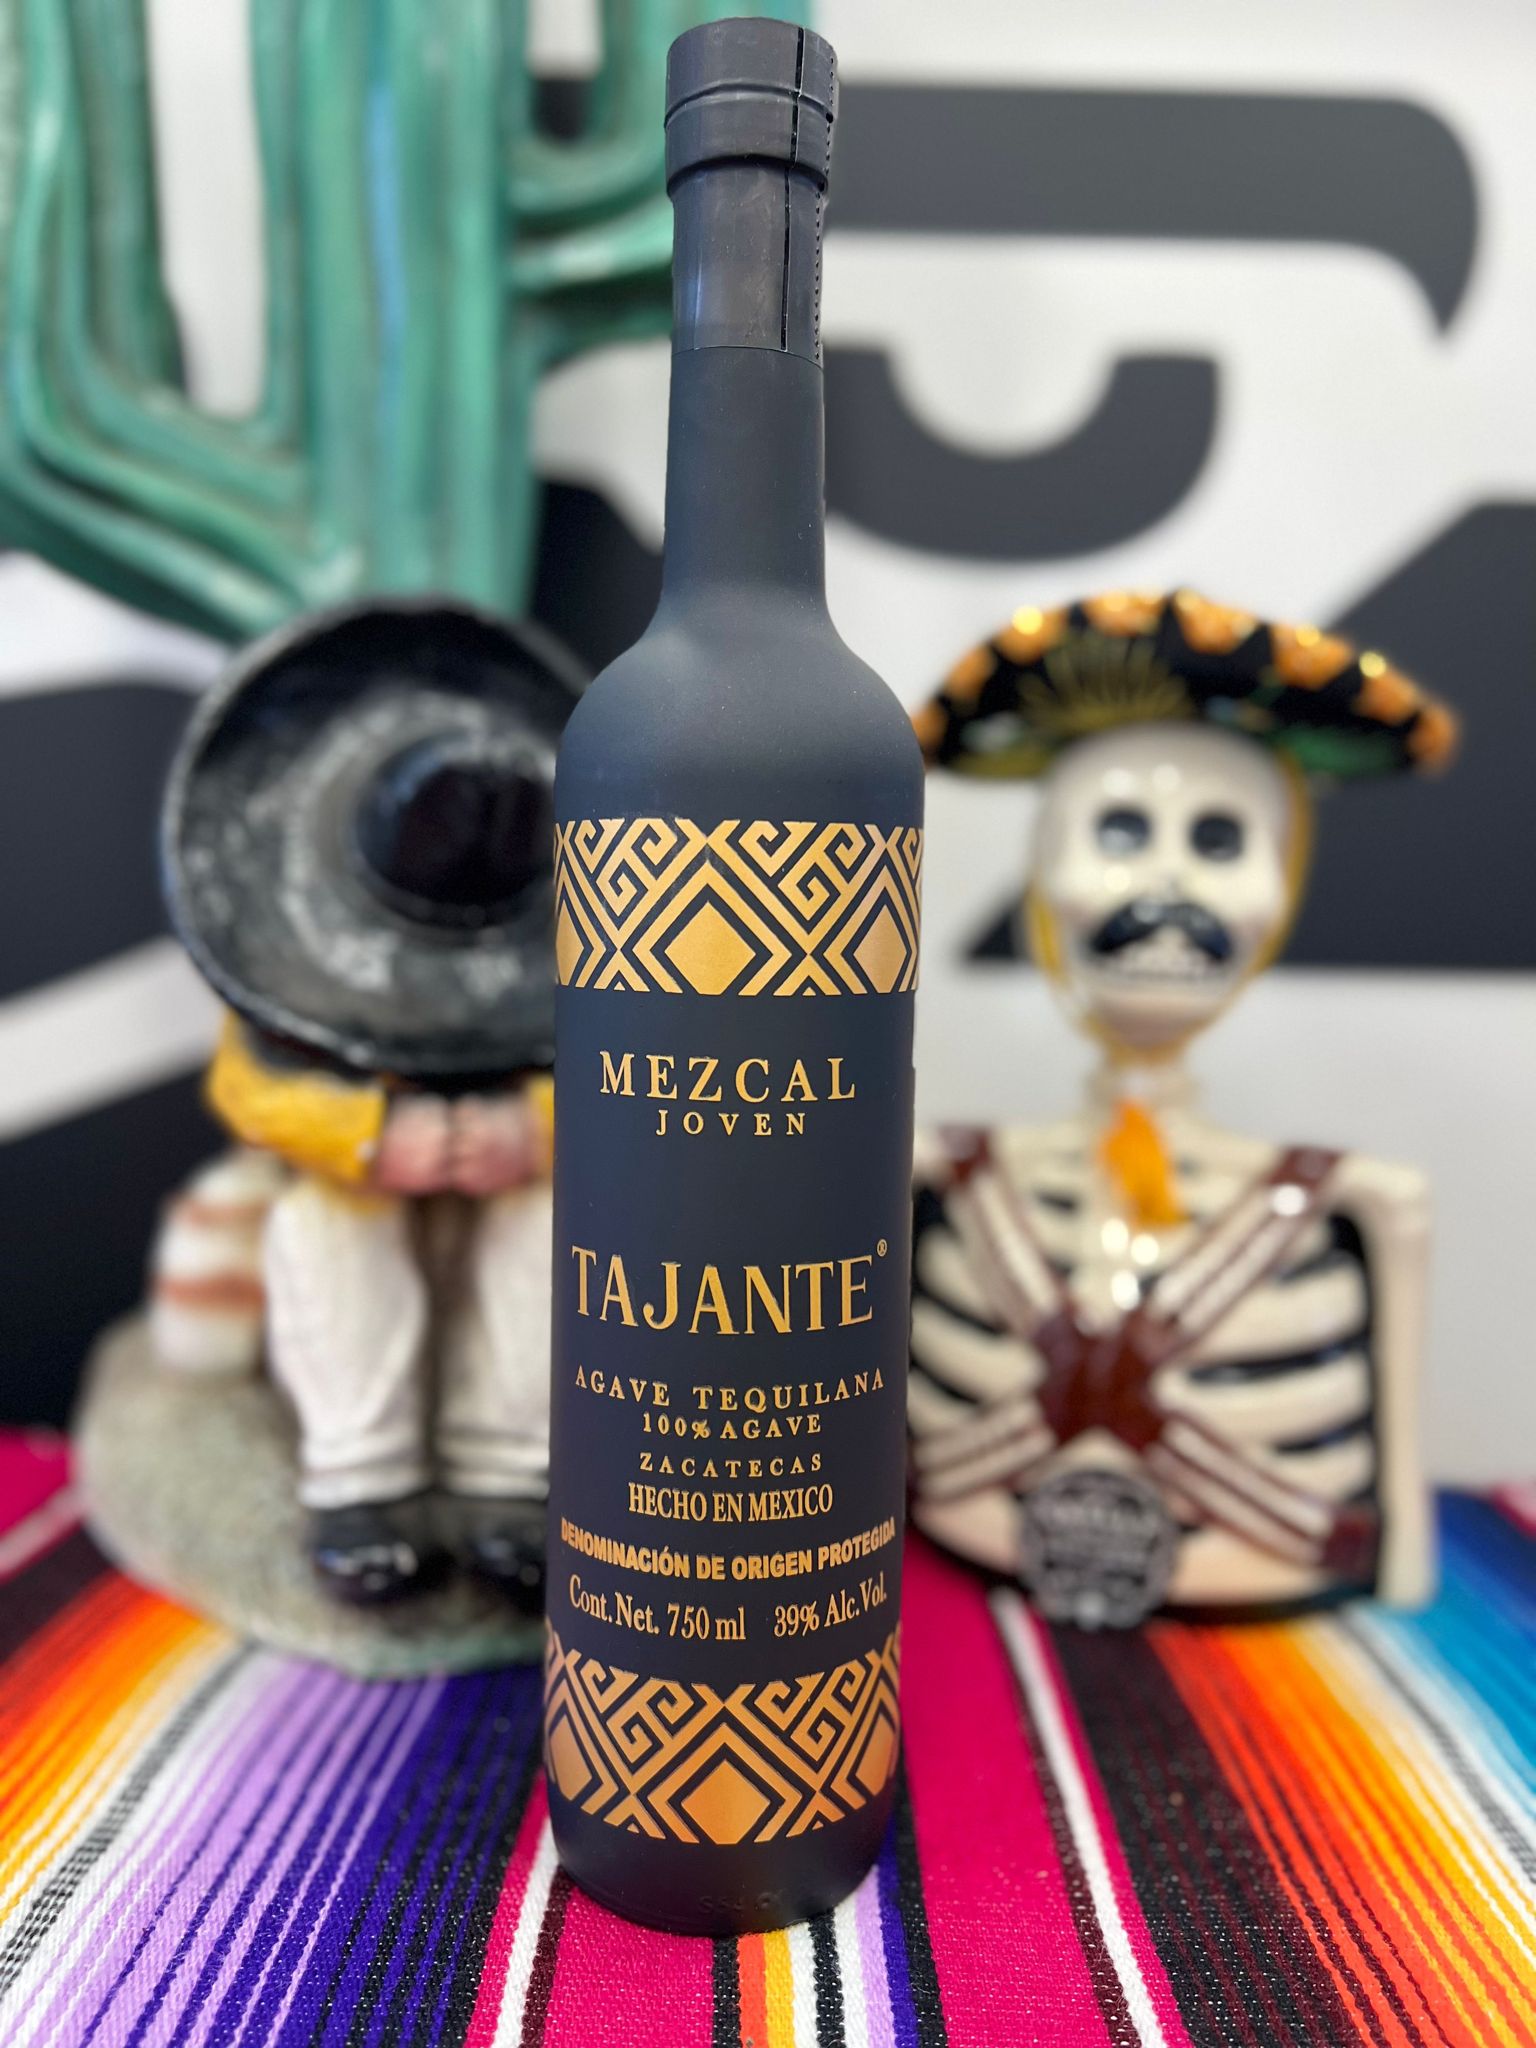 TAJANTE MEZCAL AGAVE AZUL 39% 750ML - Aztec Mexican Products and Liquor ...